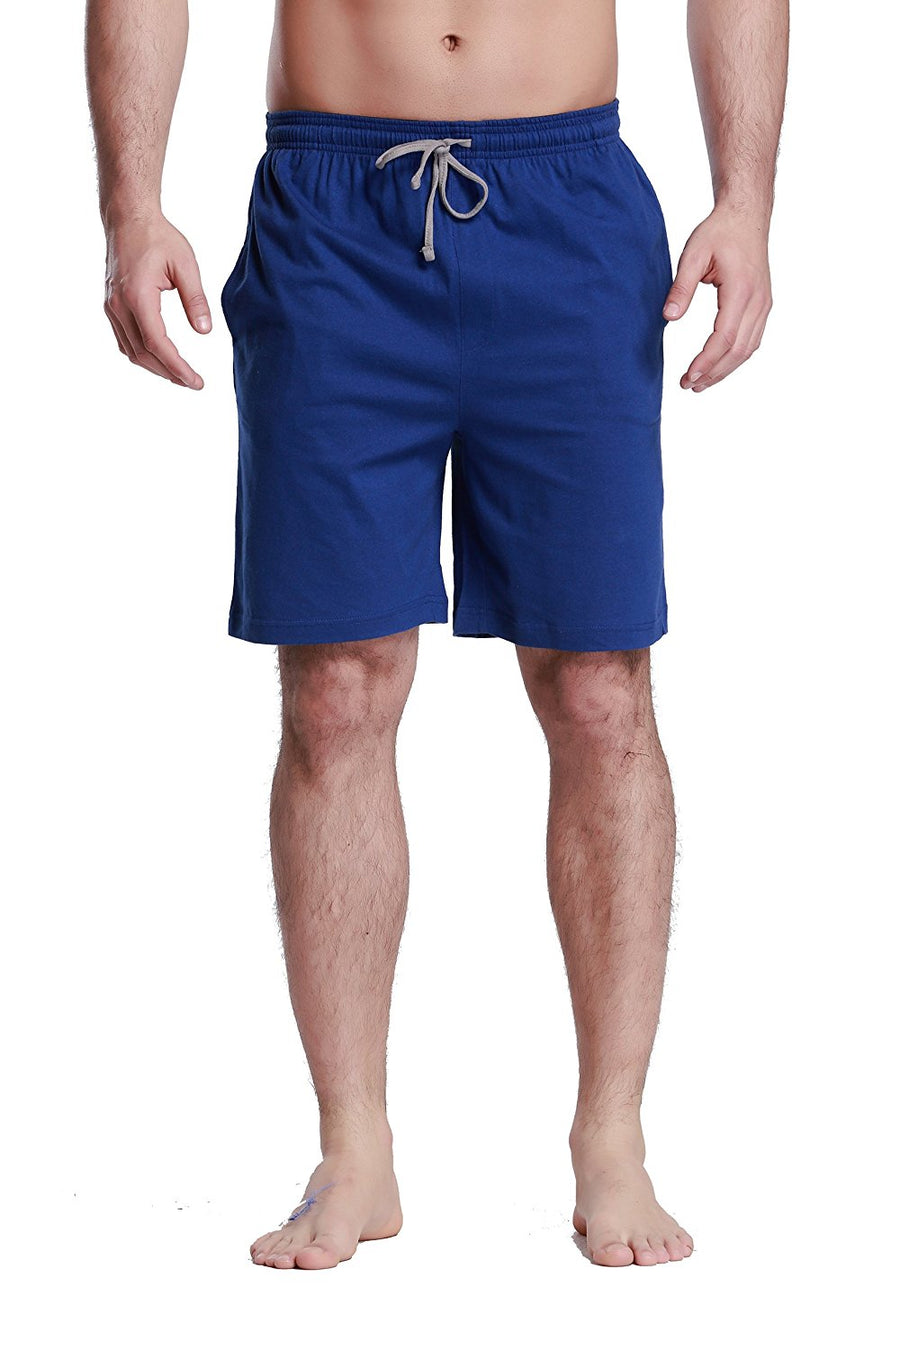 CYZ Men's Sleep Shorts - 100% Cotton Knit Sleep Shorts & Lounge Wear